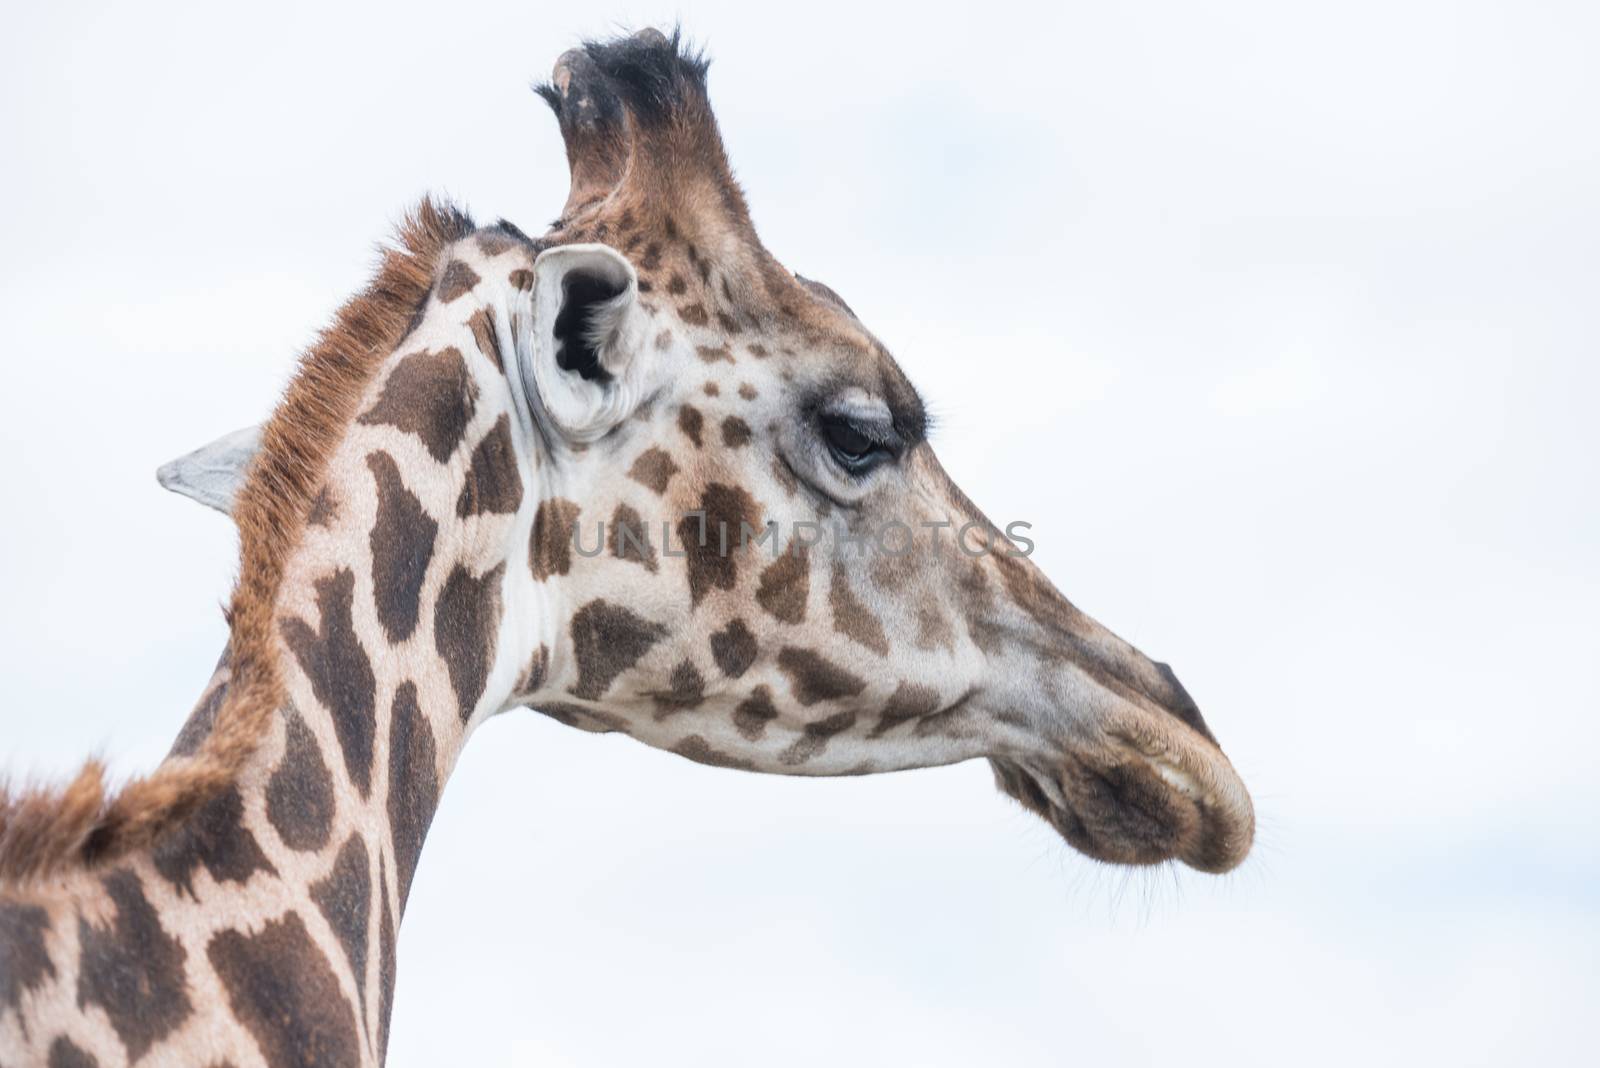 Giraffe in a wildlife reserve  by IVYPHOTOS